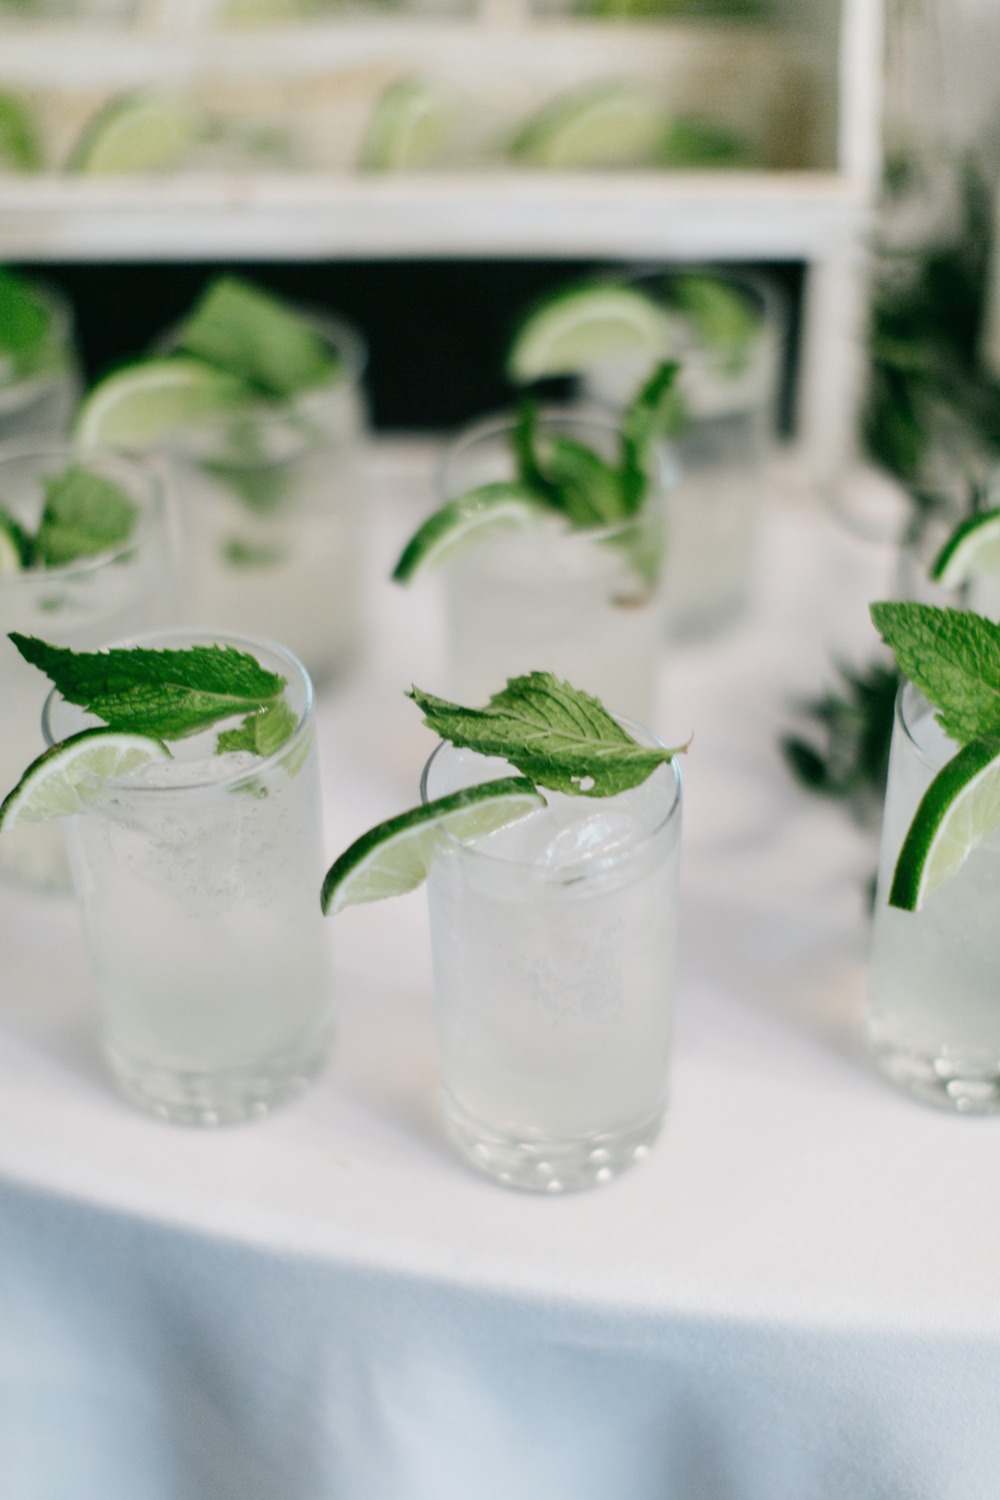 Wedding cocktails